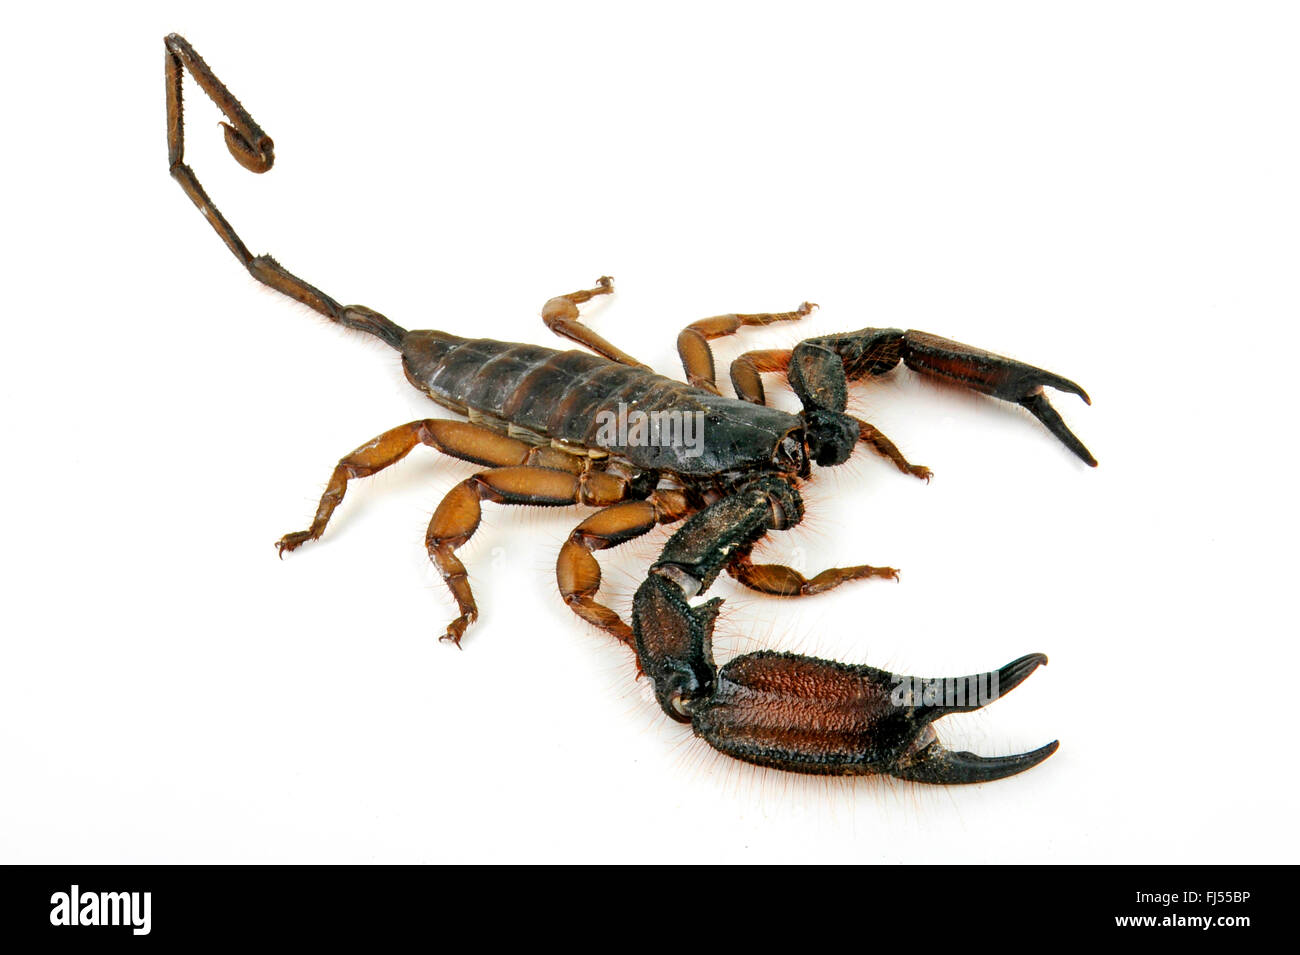 Rock sud-africain (scorpion) Hadogenes troglodytes, cut-out Banque D'Images